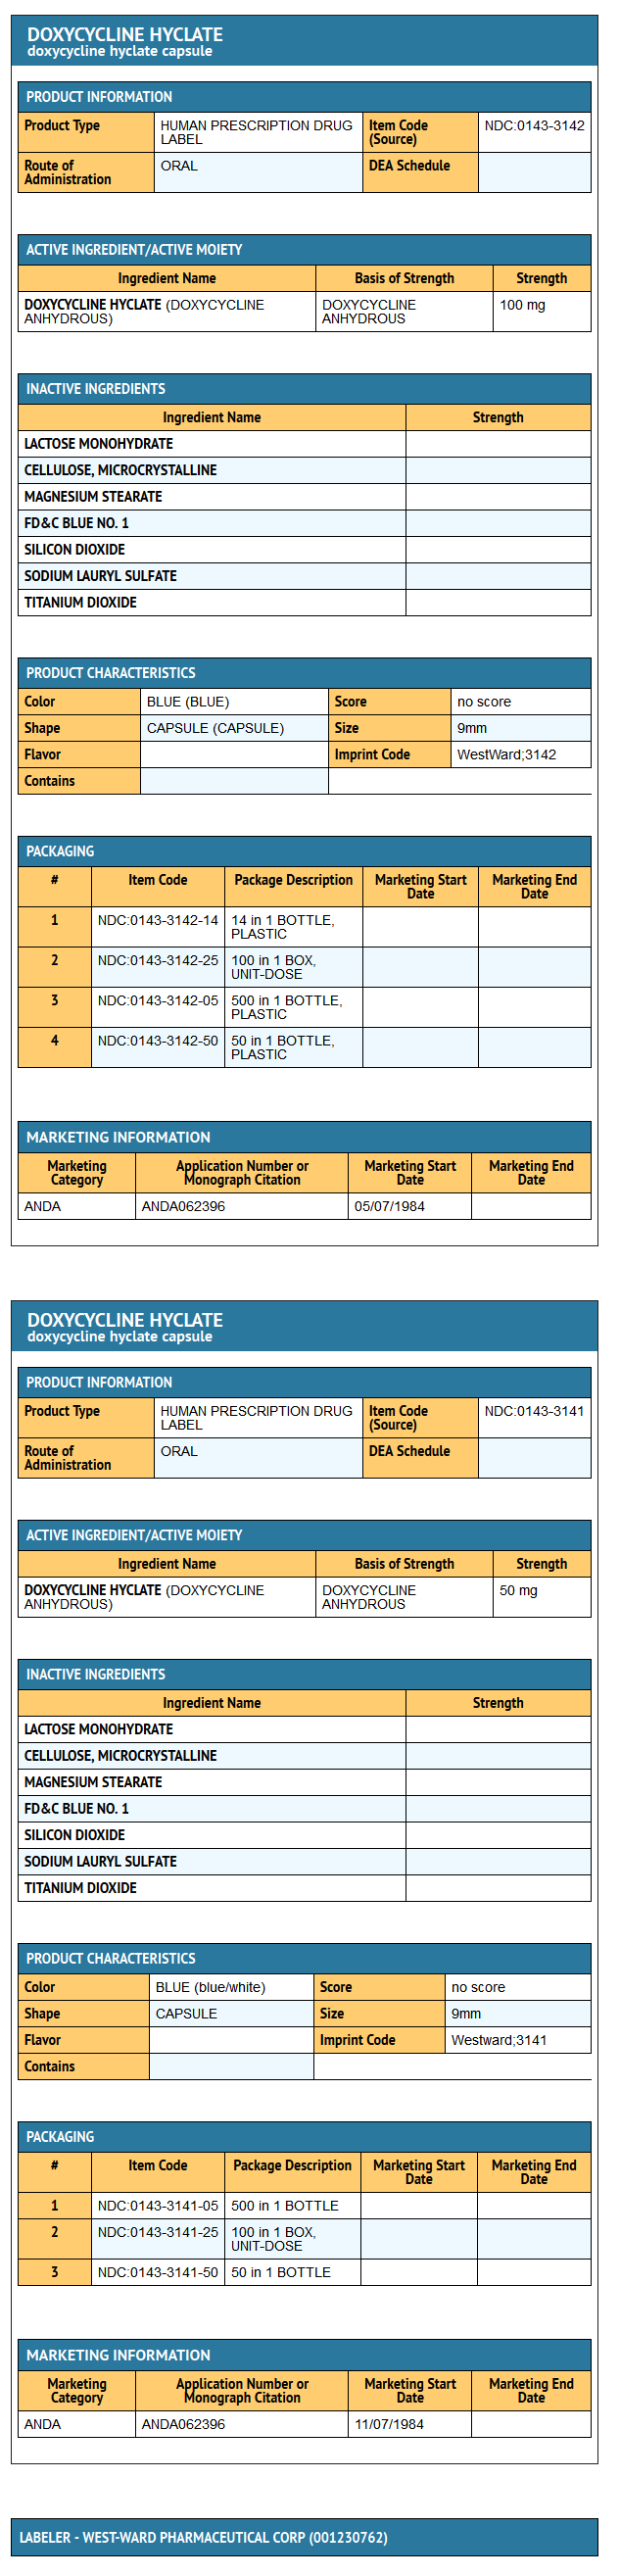 File:Doxycycline label.png